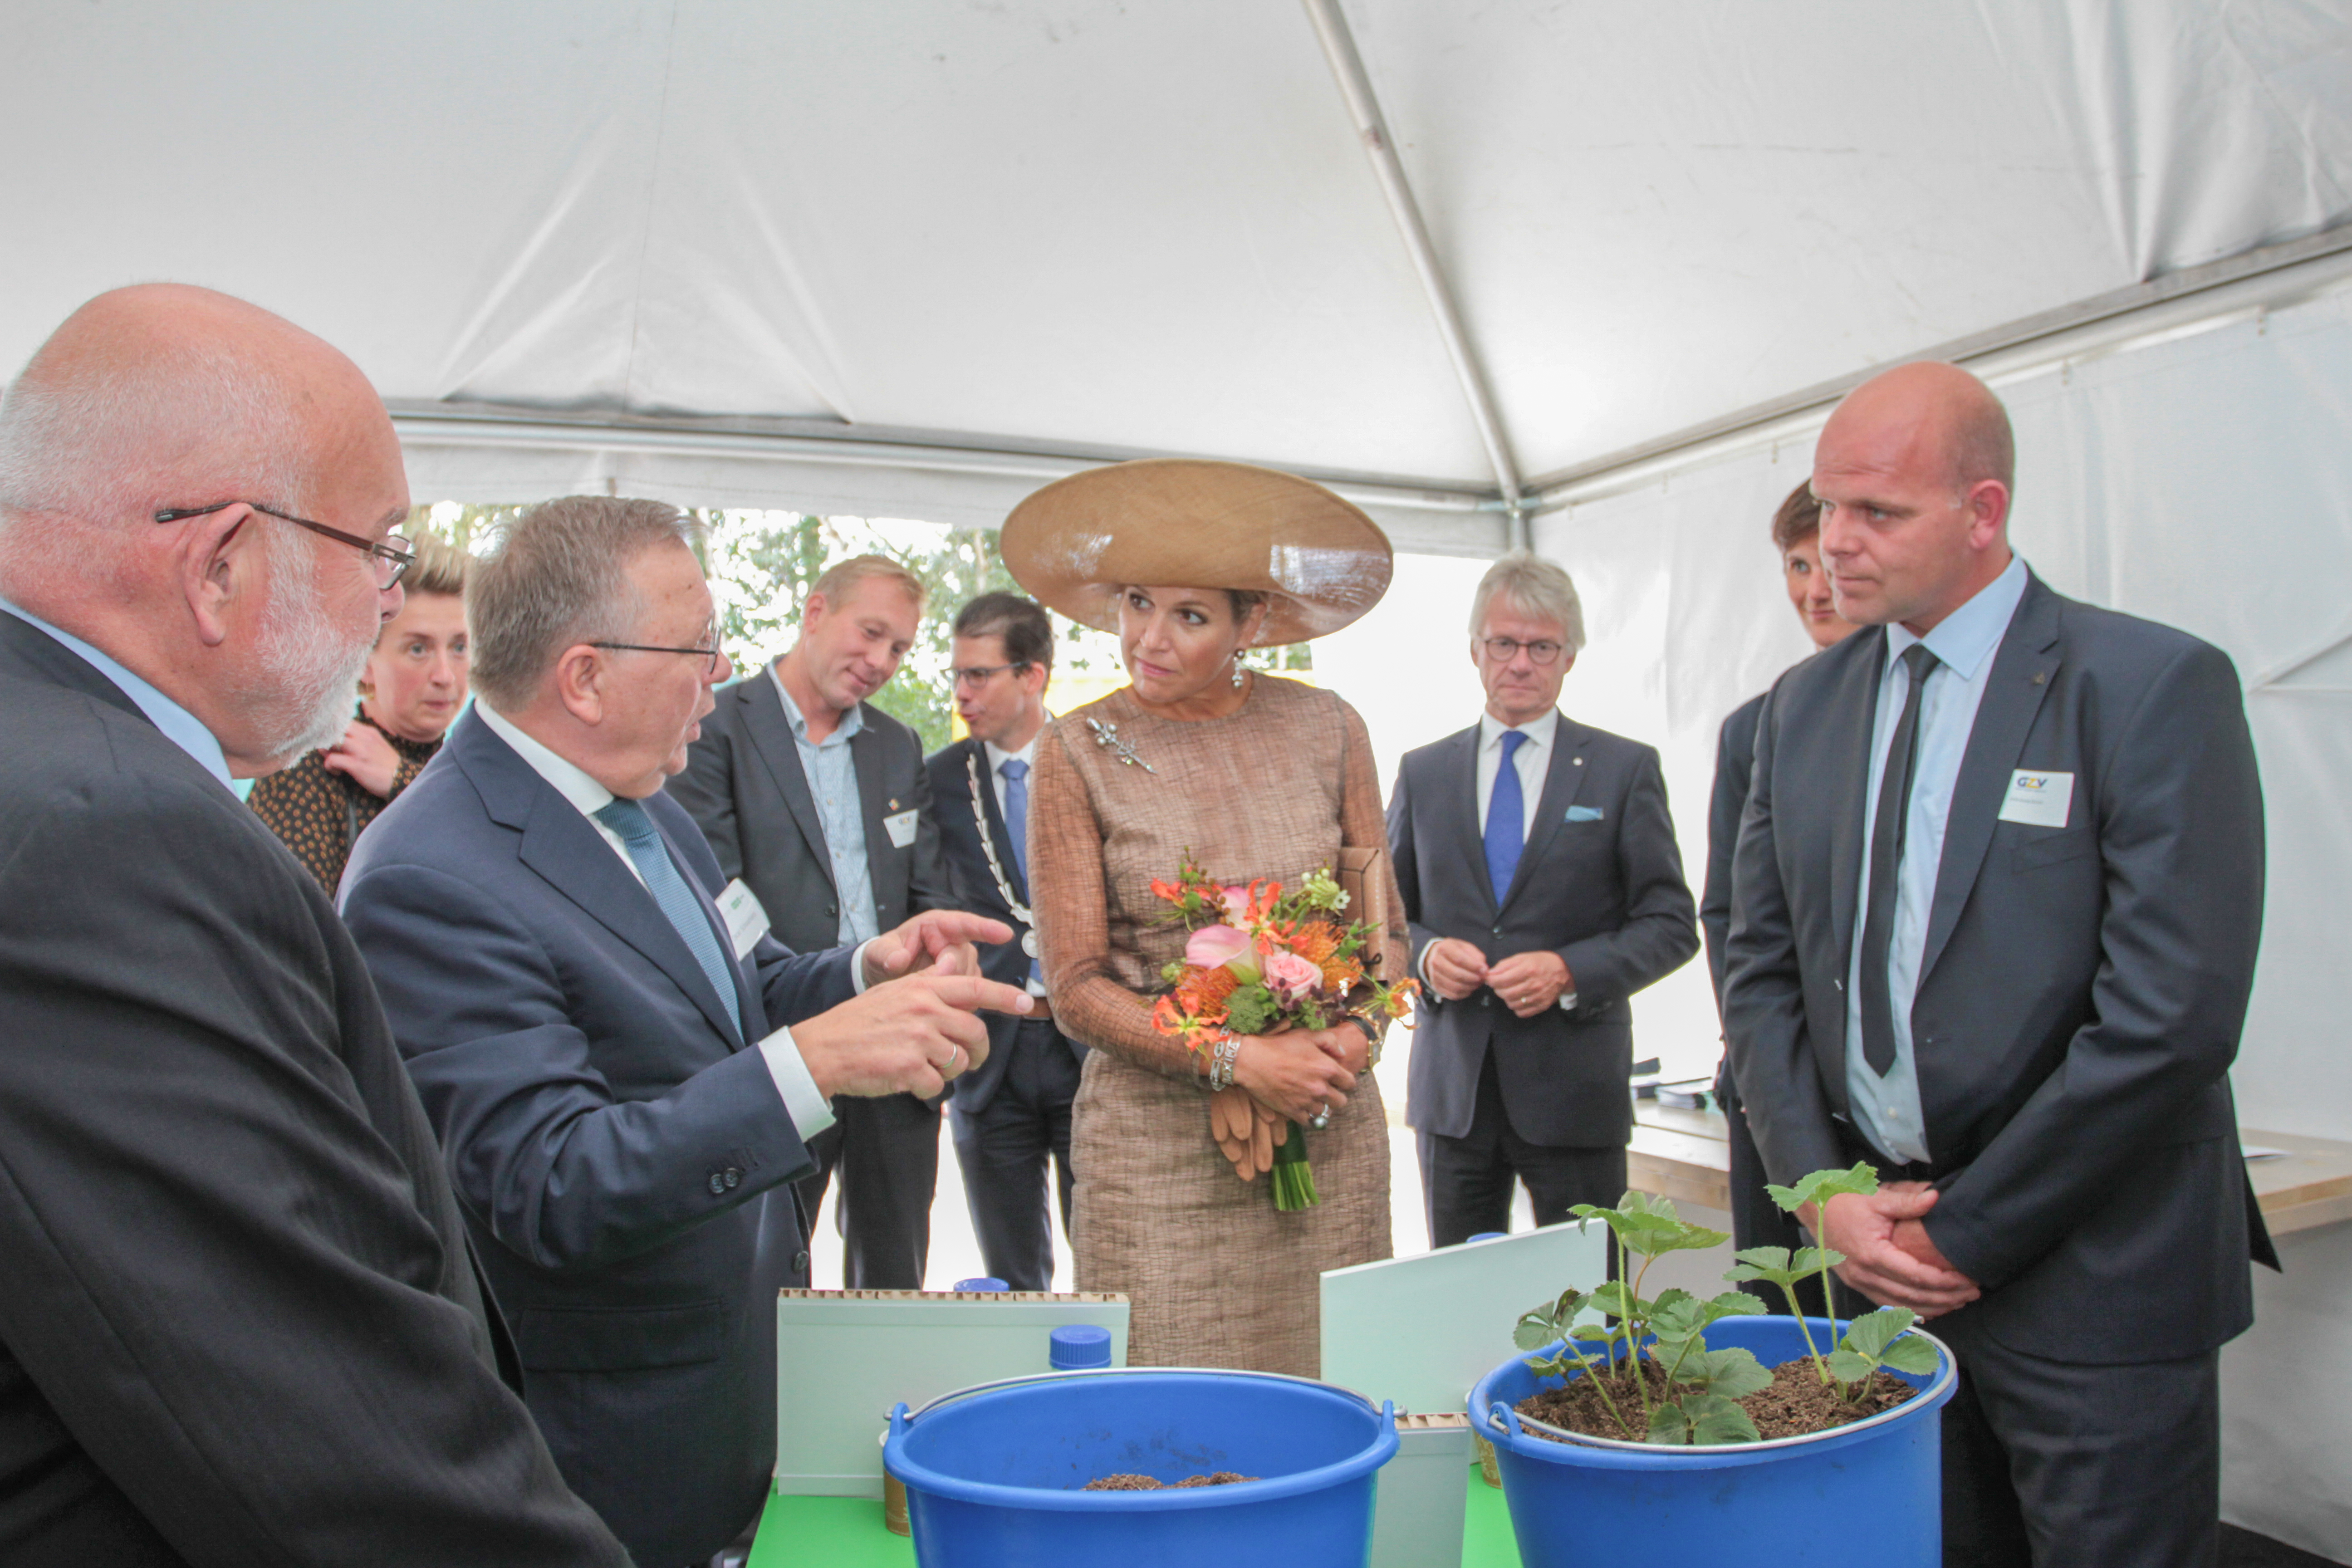 Queen Máxima opens the Green Mineral Power Plant in Beltrum